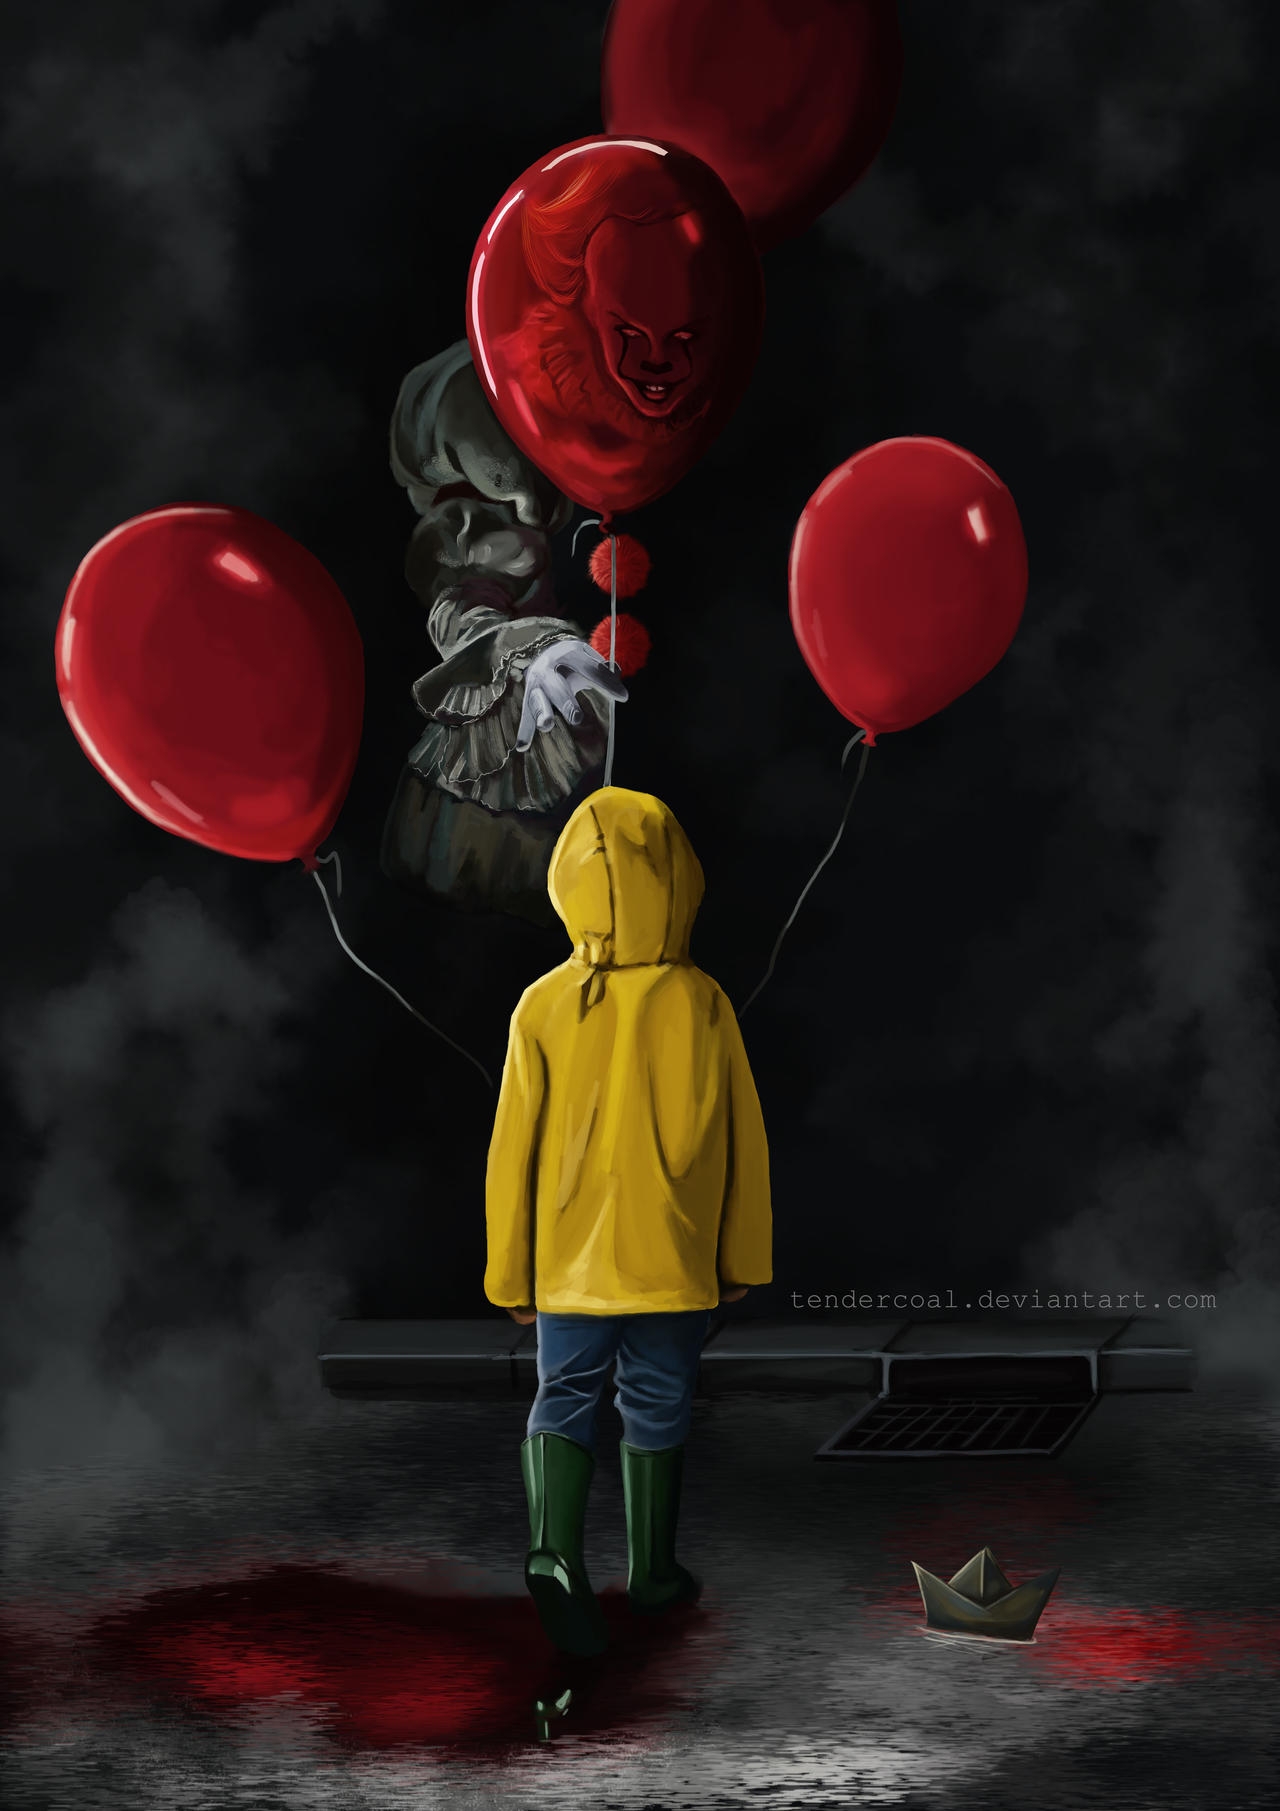 Want a balloon? by tendercoal on DeviantArt